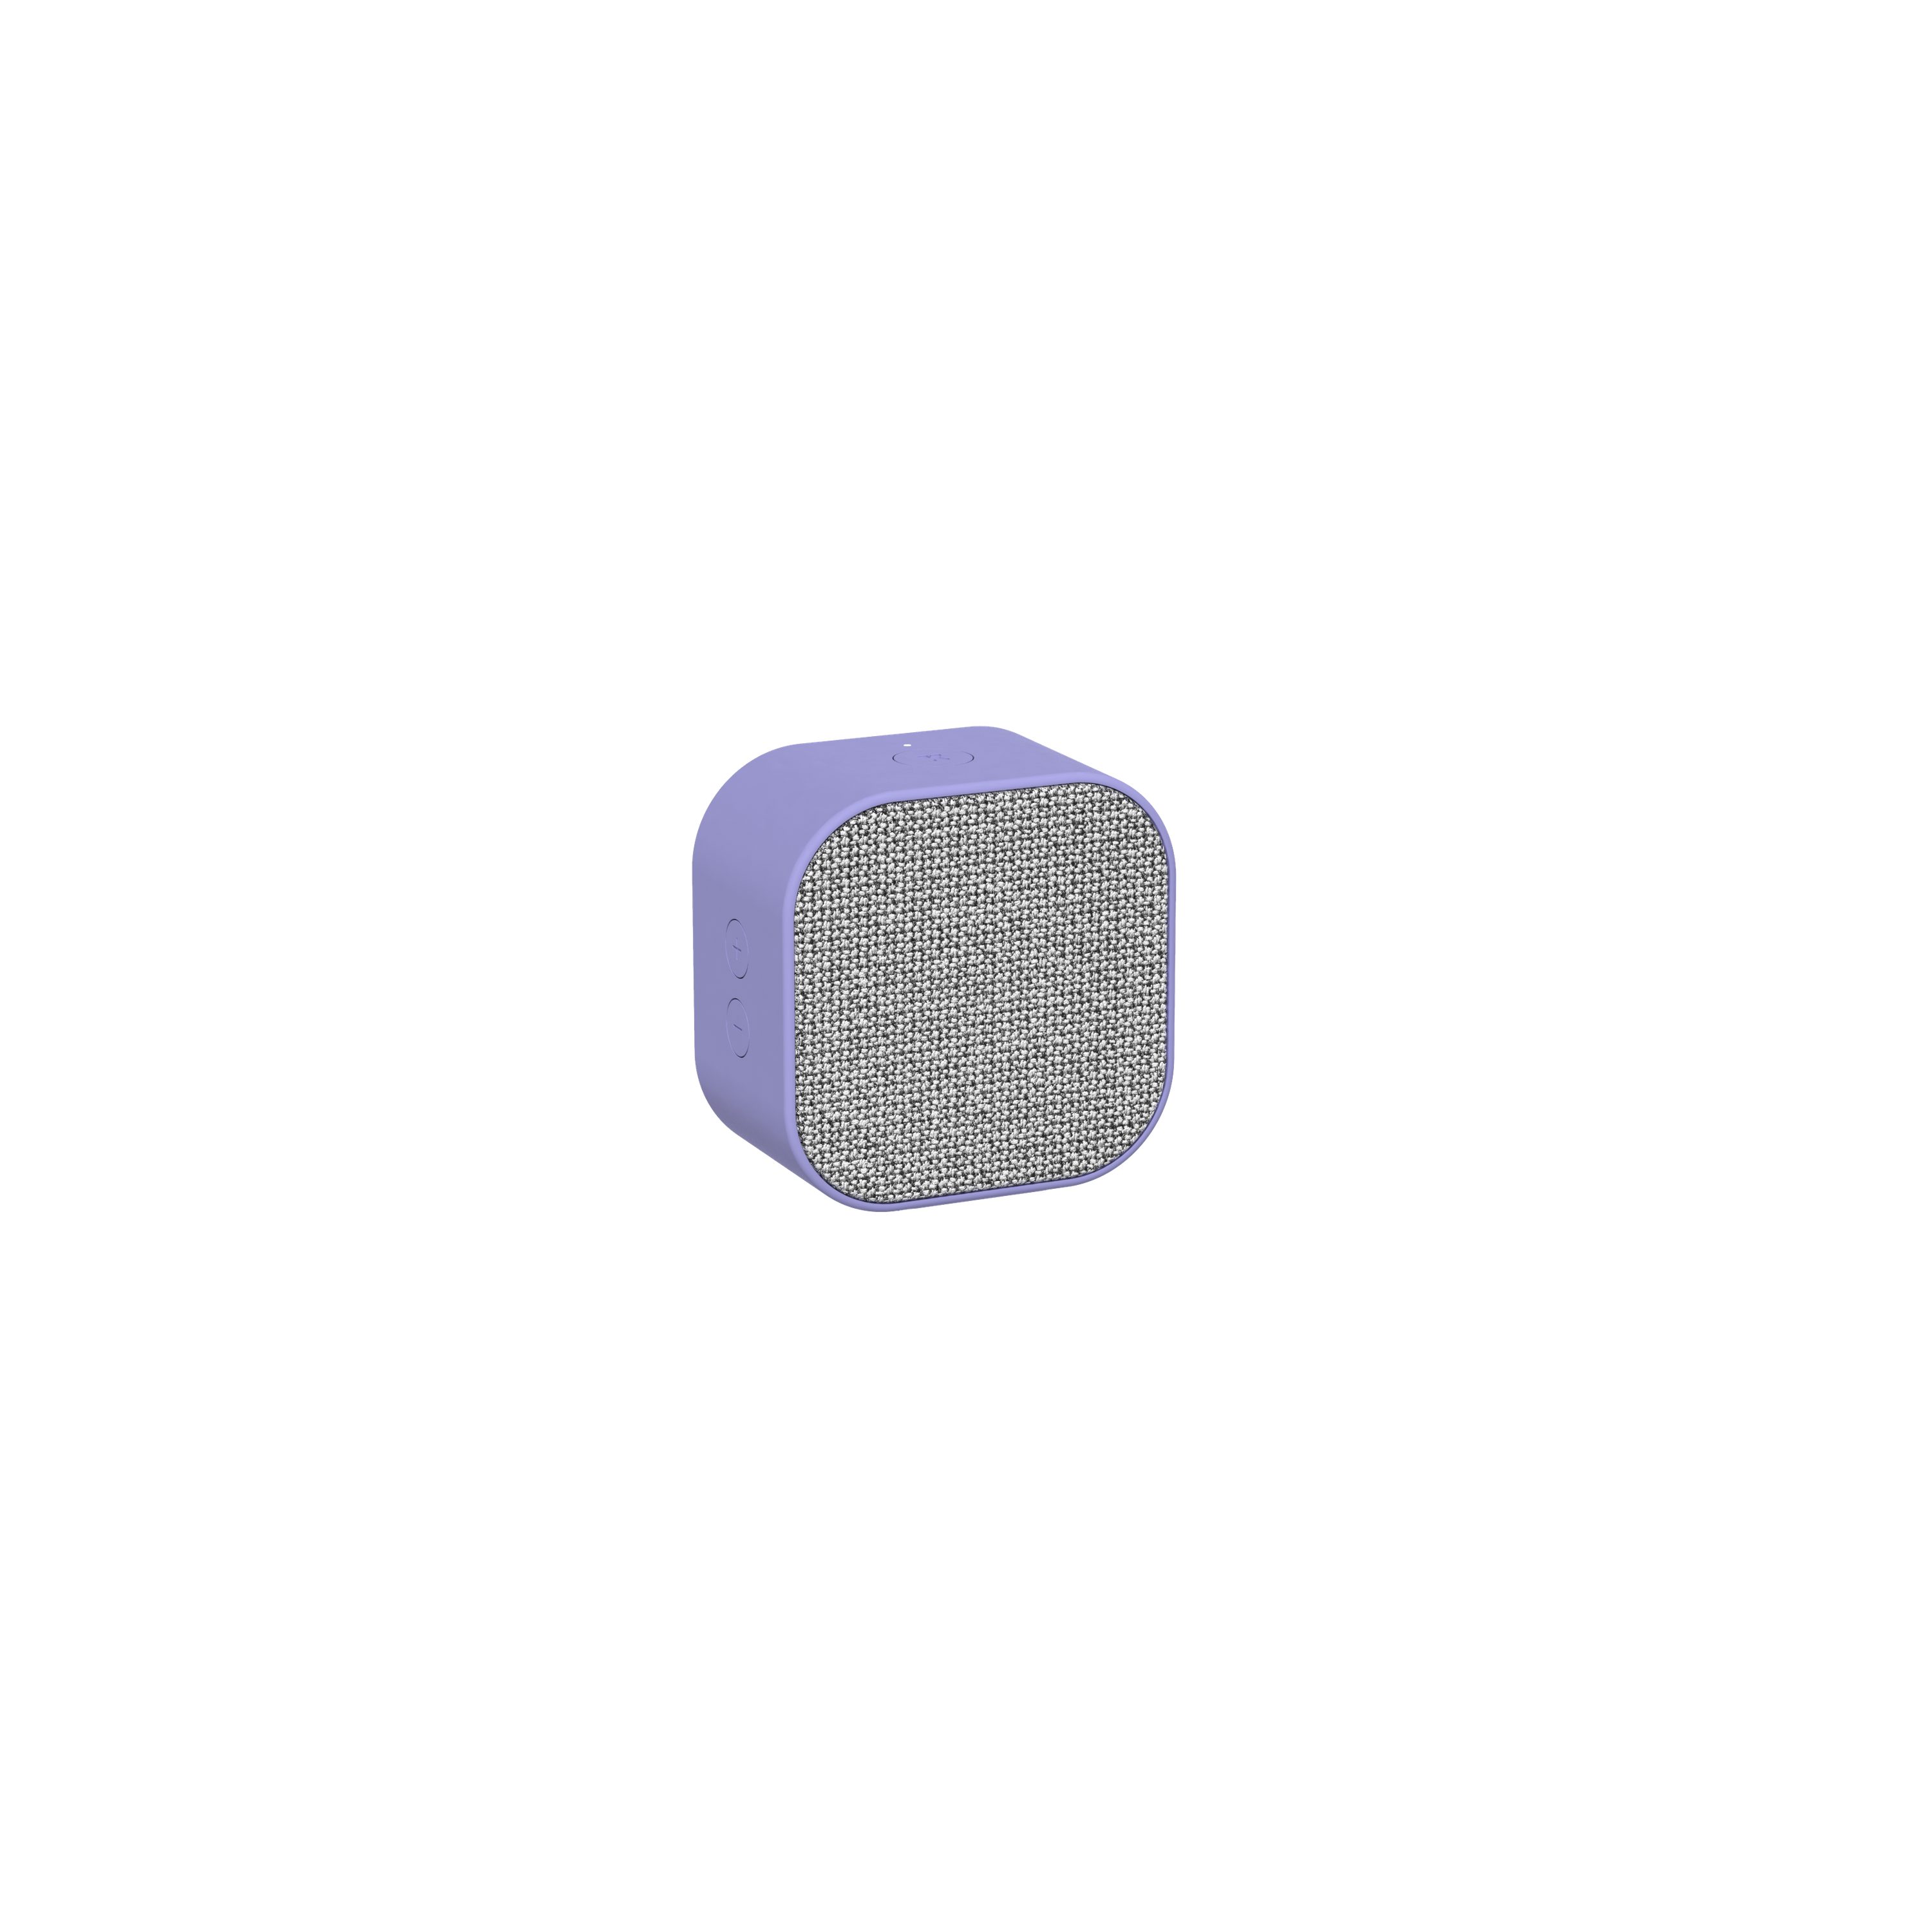 aCUBE Lautsprecher Lautsprecher KREAFUNK lavender (aCUBE Lautsprecher) spring Bluetooth Bluetooth